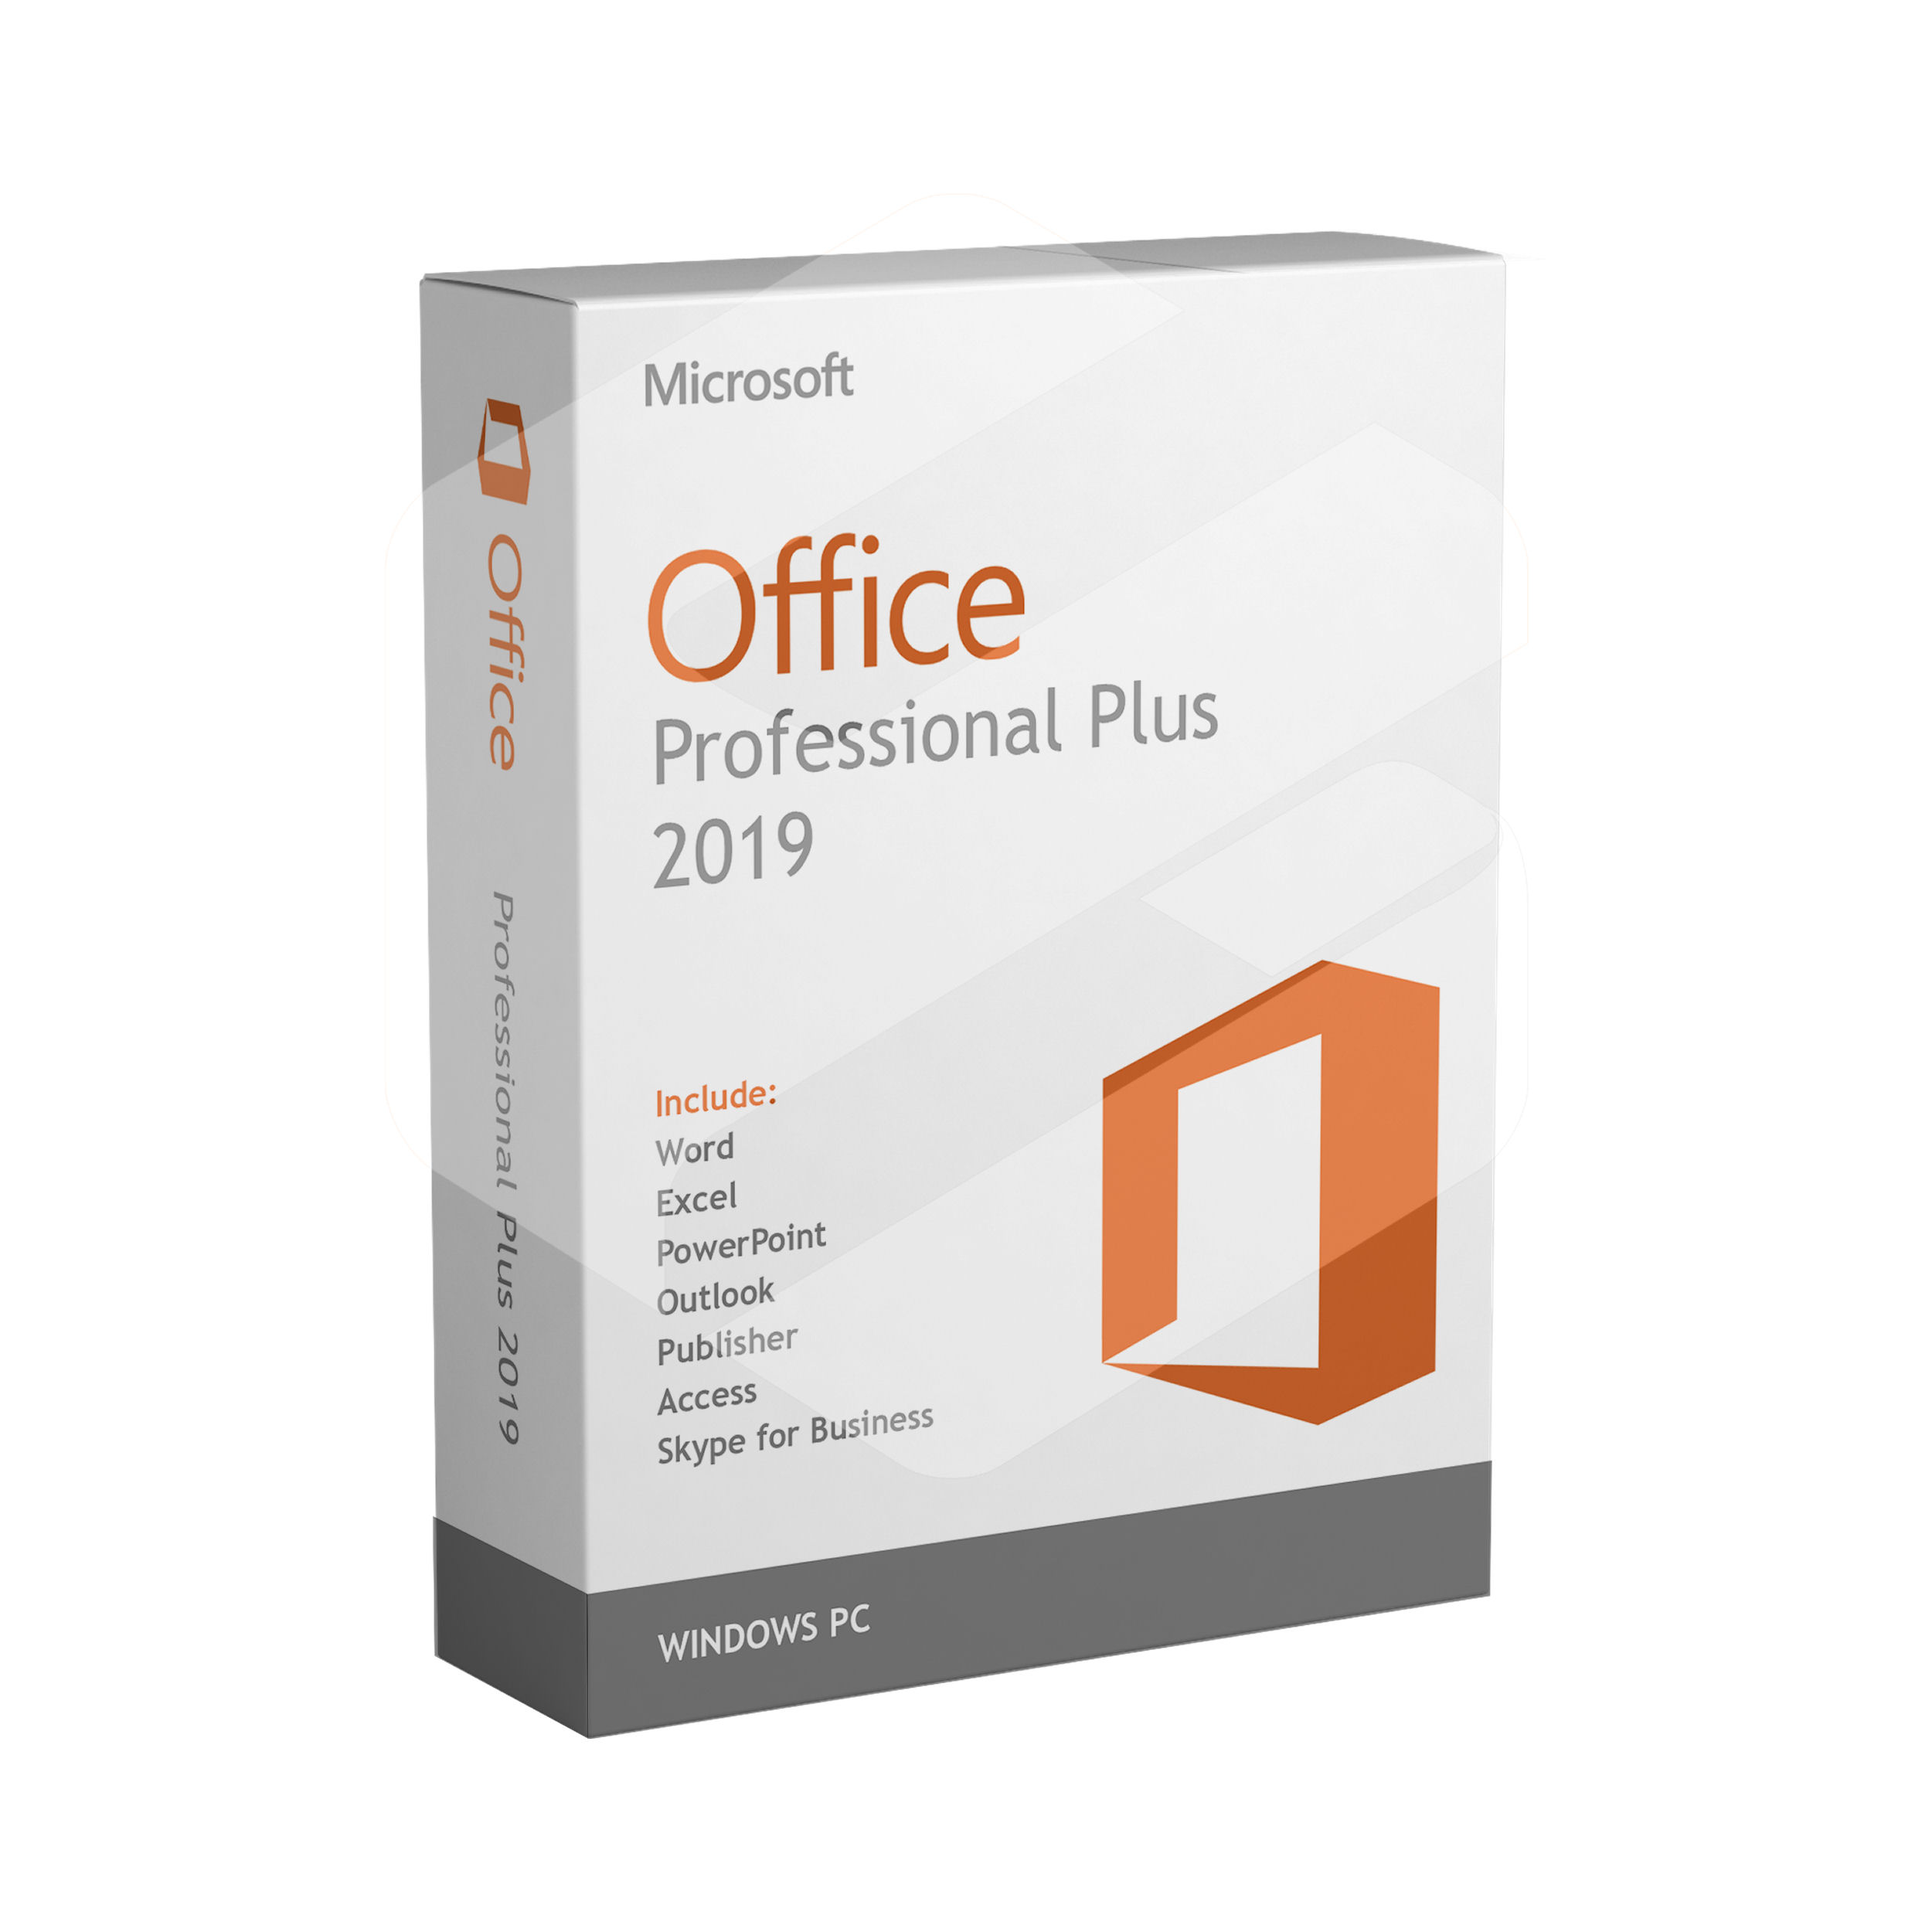 Microsoft Office 2019　Professional Plus 32bit64bit 両方対応 マイクロソフト オフィス2019 再インストール可 プロダクトキー 永久ライセンス ダウンロード版